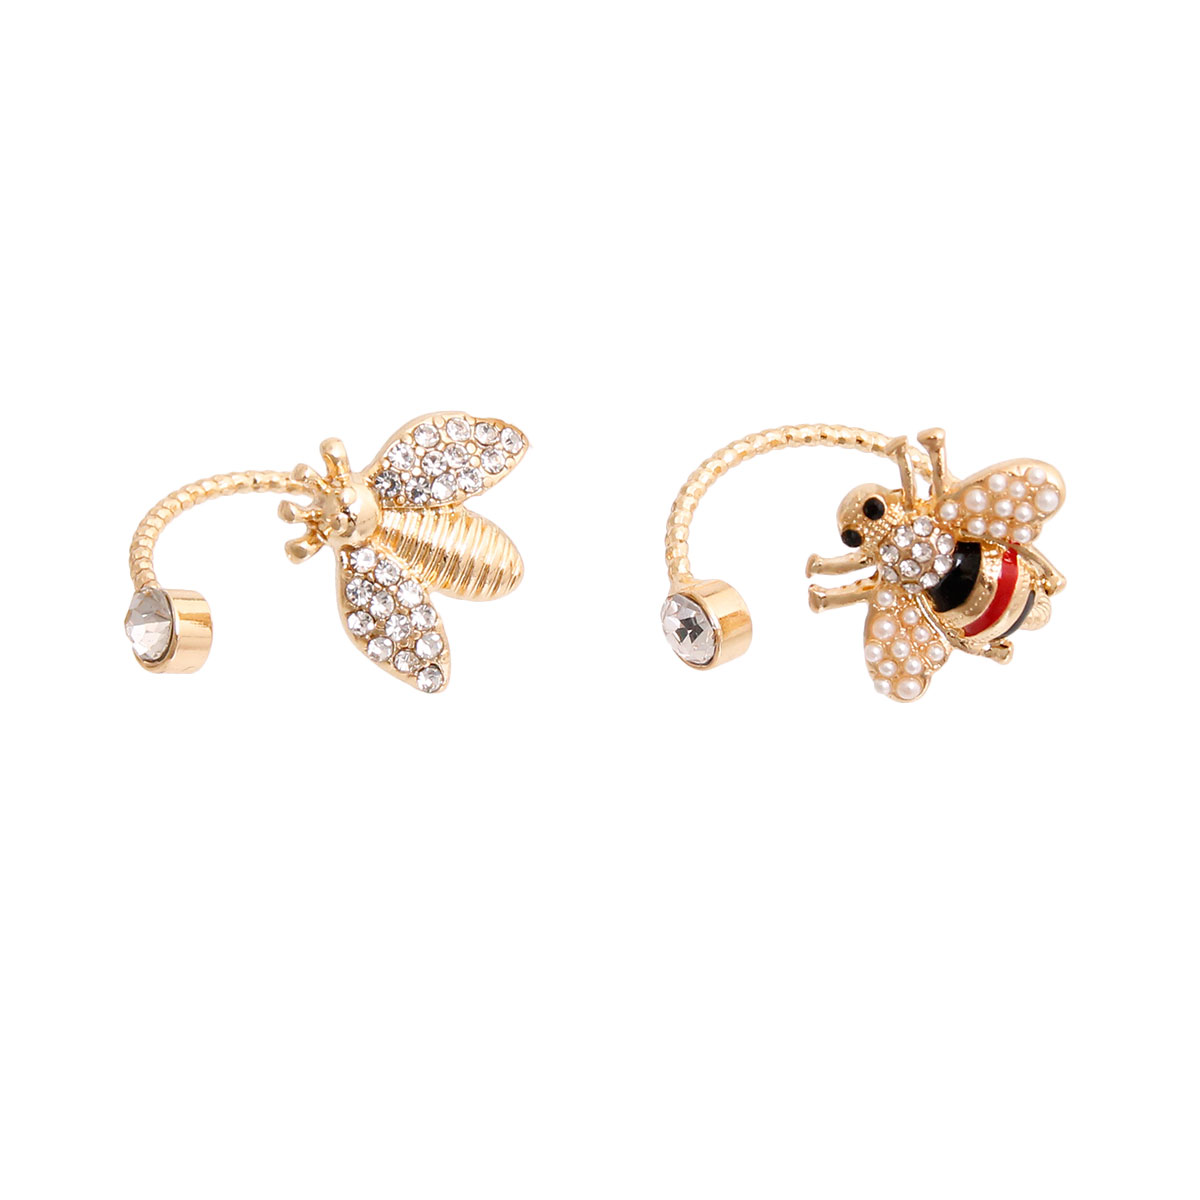 Designer Style Gold Bee Wrap Ring Set